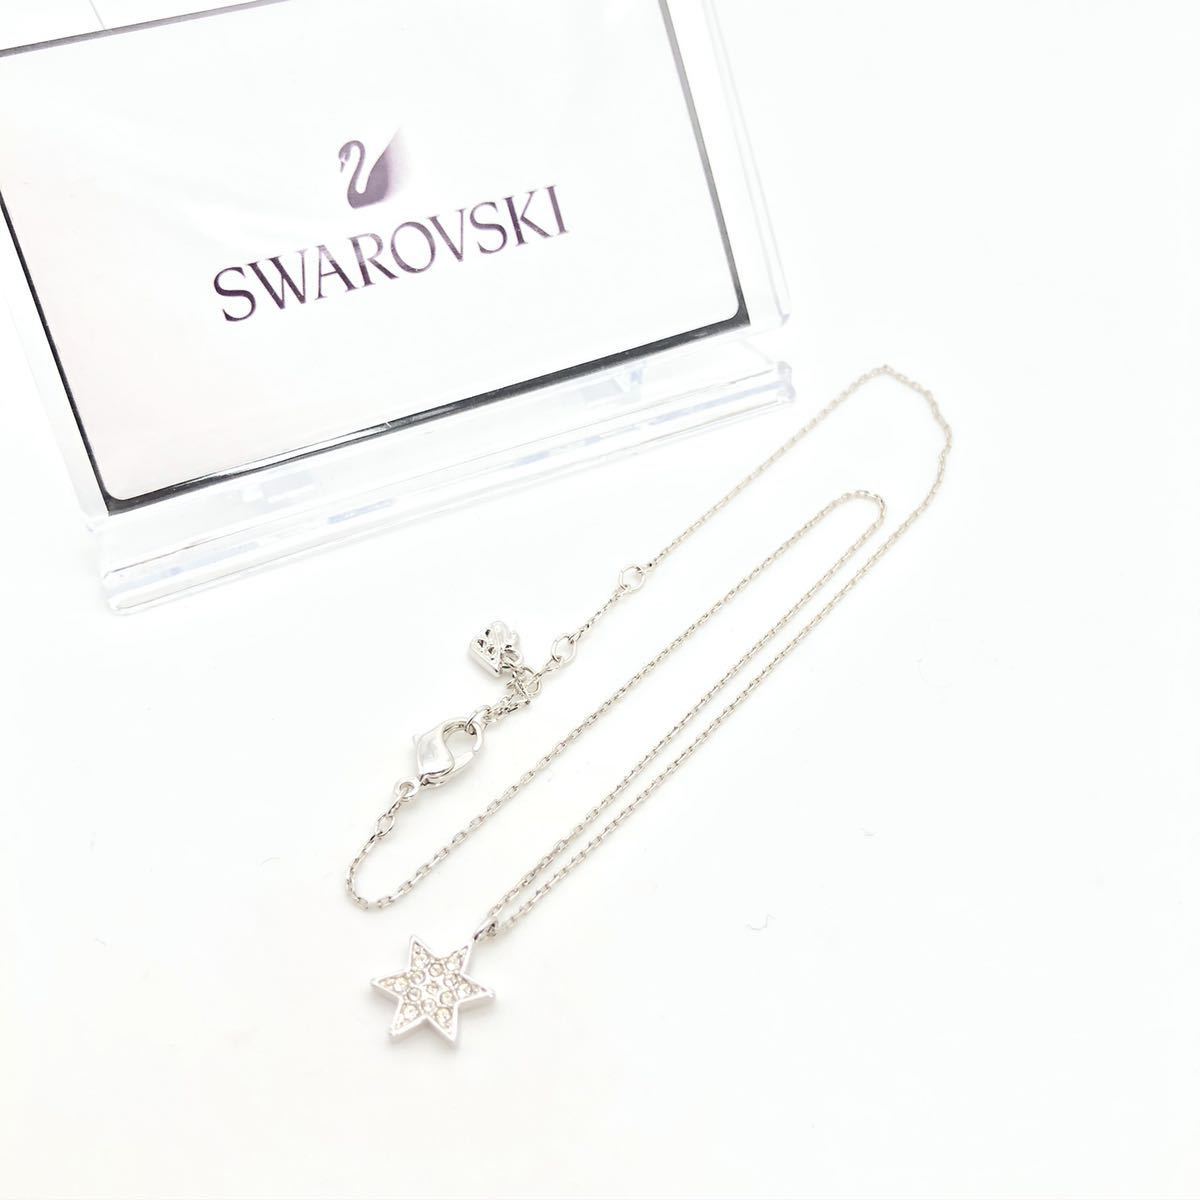 SWROVSKI スワロフスキー 結晶 ネックレス 正規品